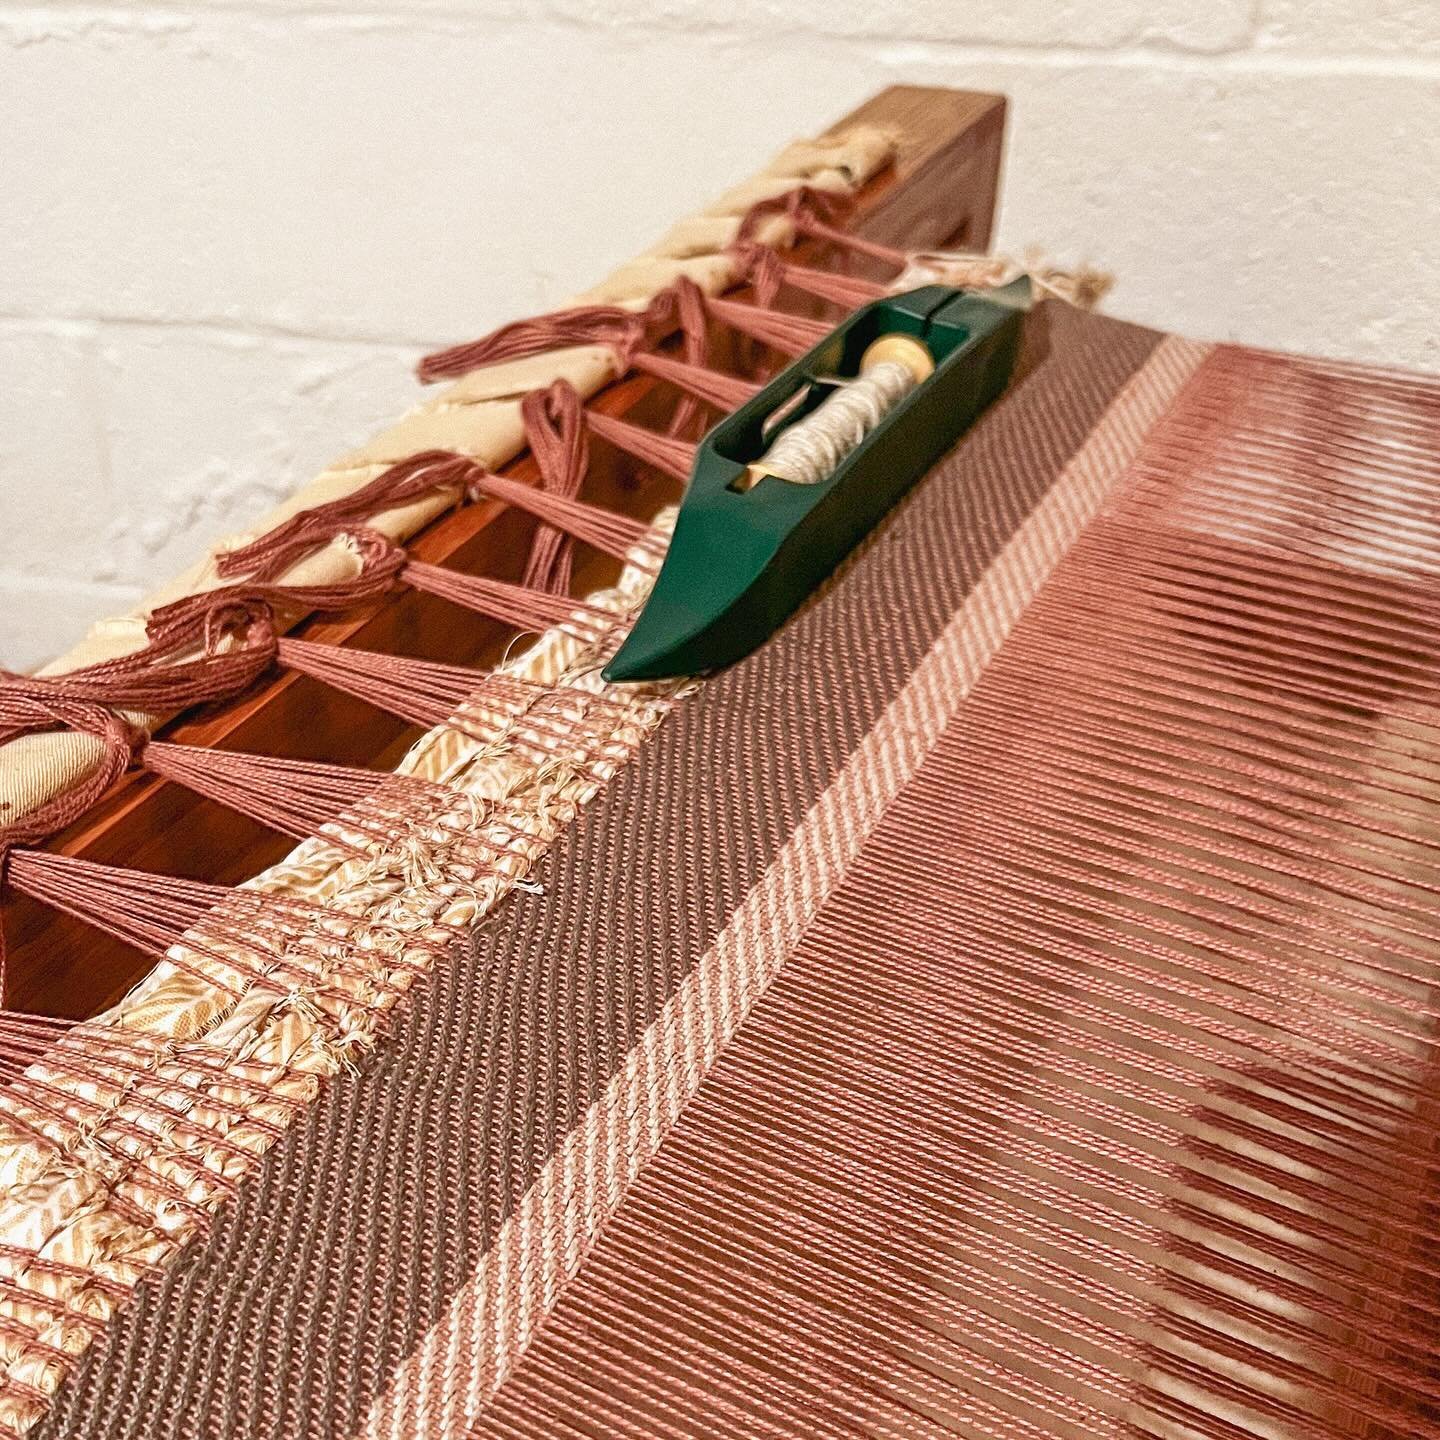 The next weaving is officially a go! #weaving #textile #floorloom #fiberart